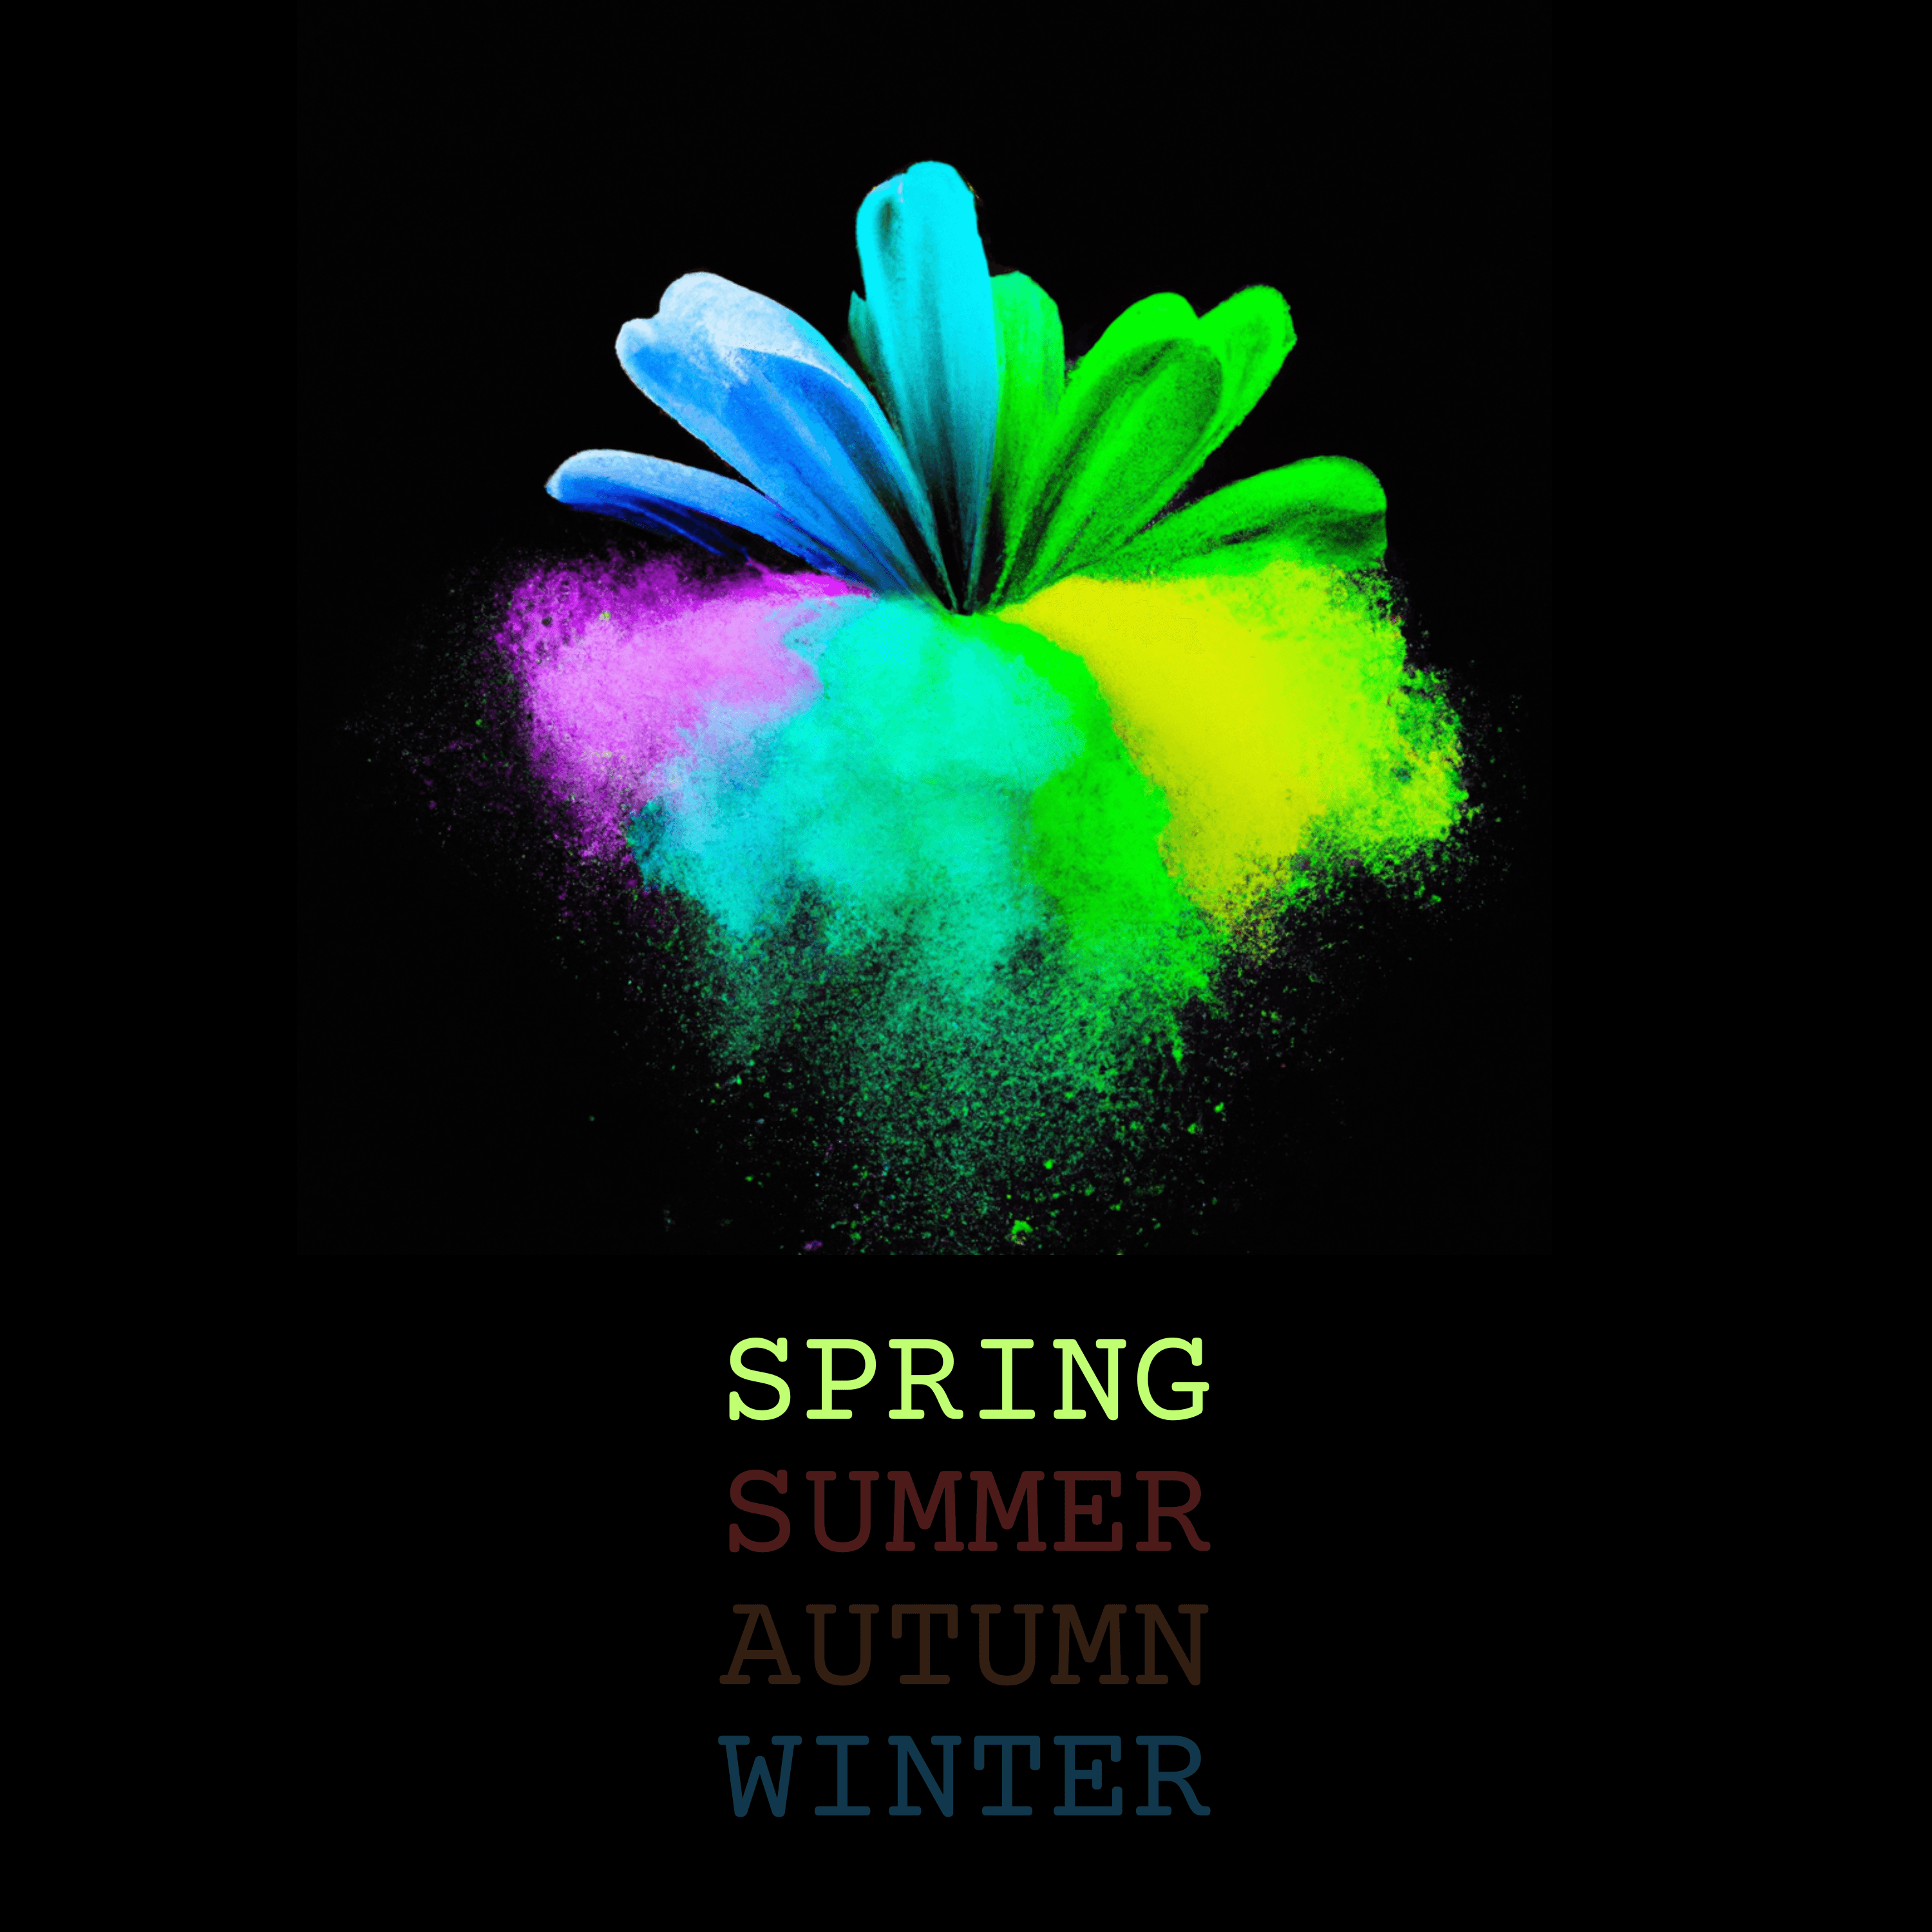 4 Seasons: Spring